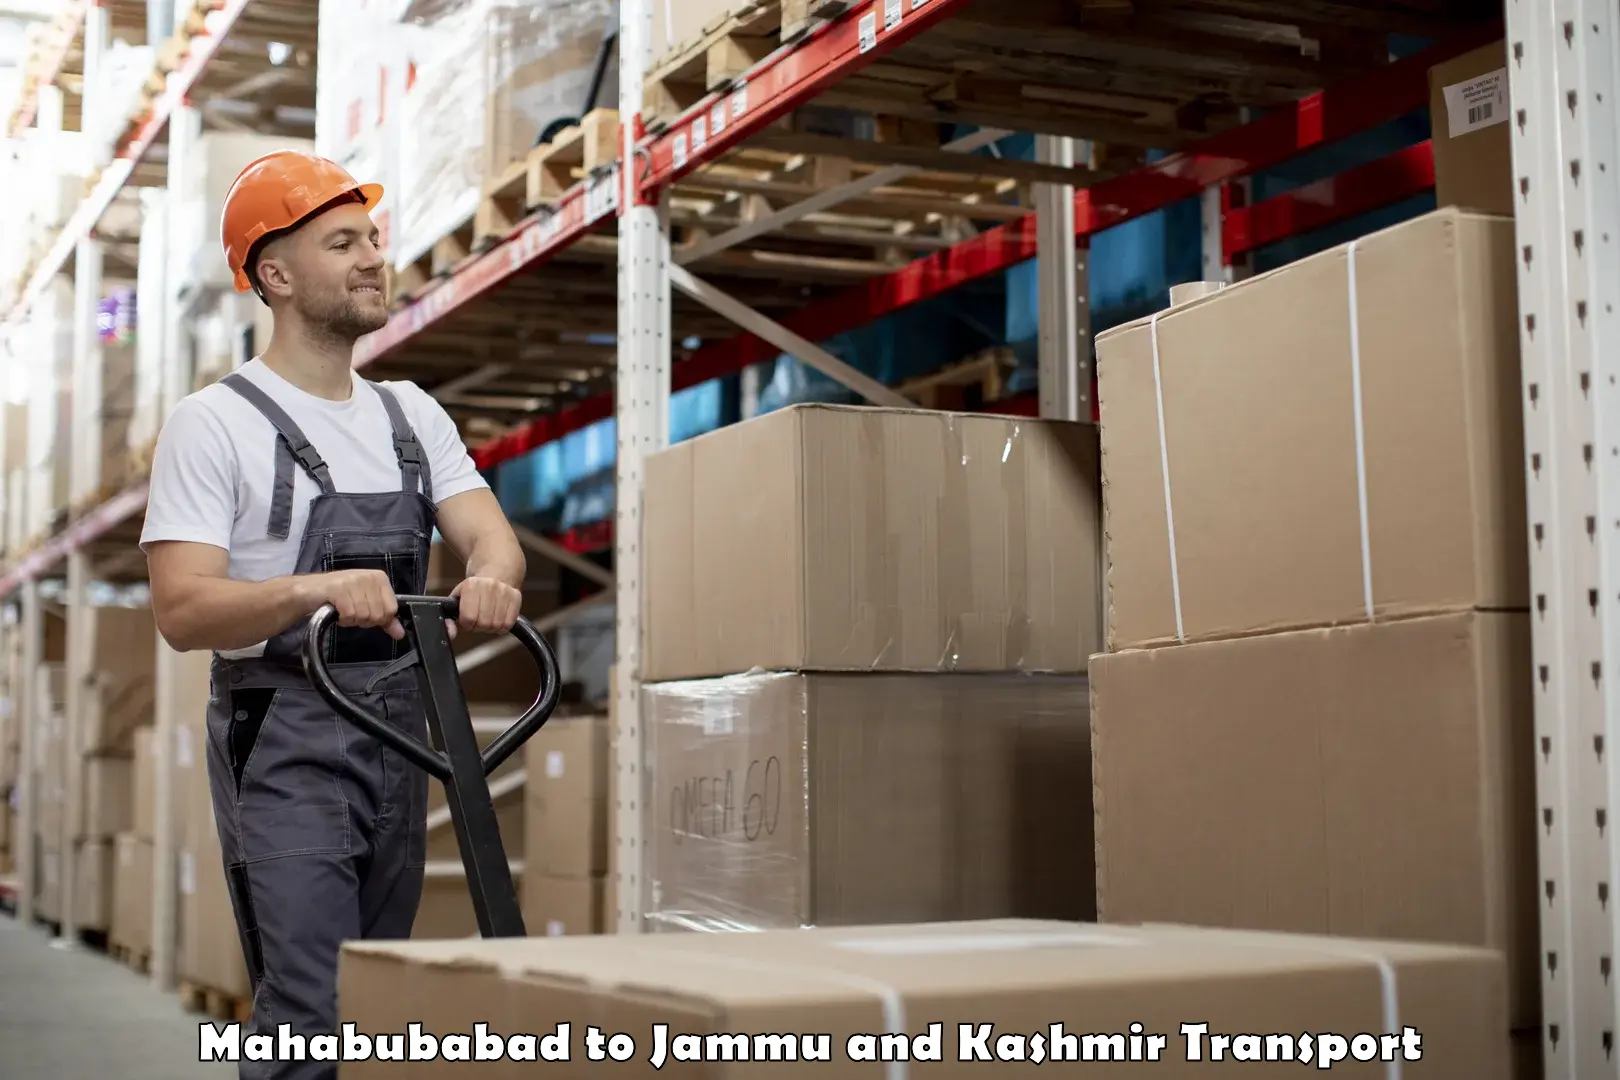 Truck transport companies in India Mahabubabad to Katra